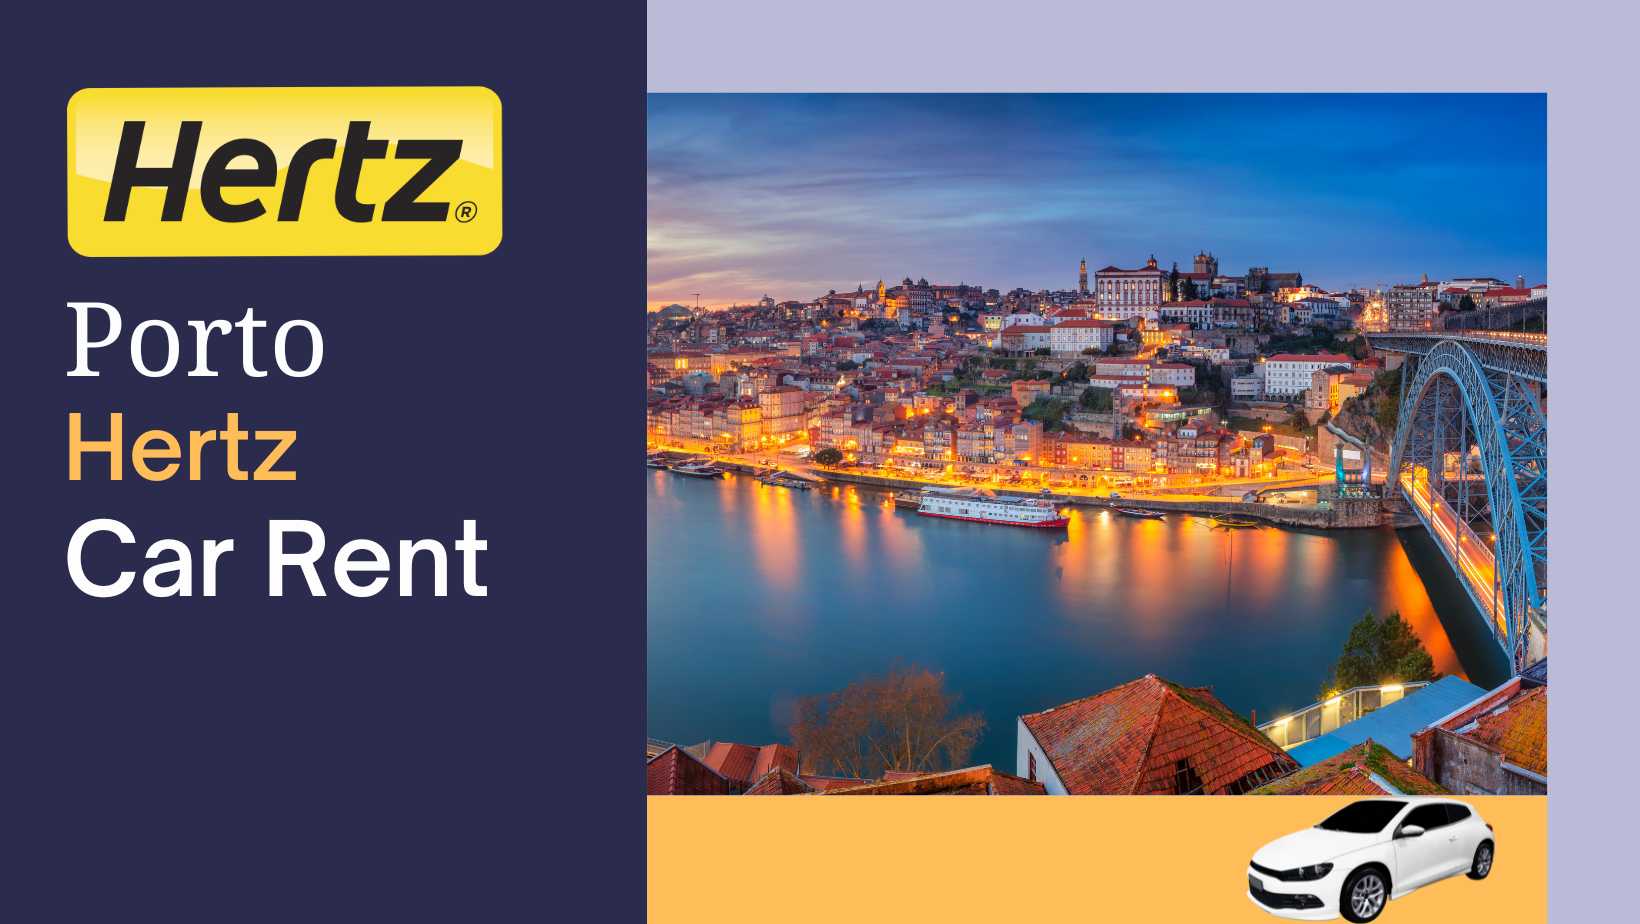 Hertz Porto